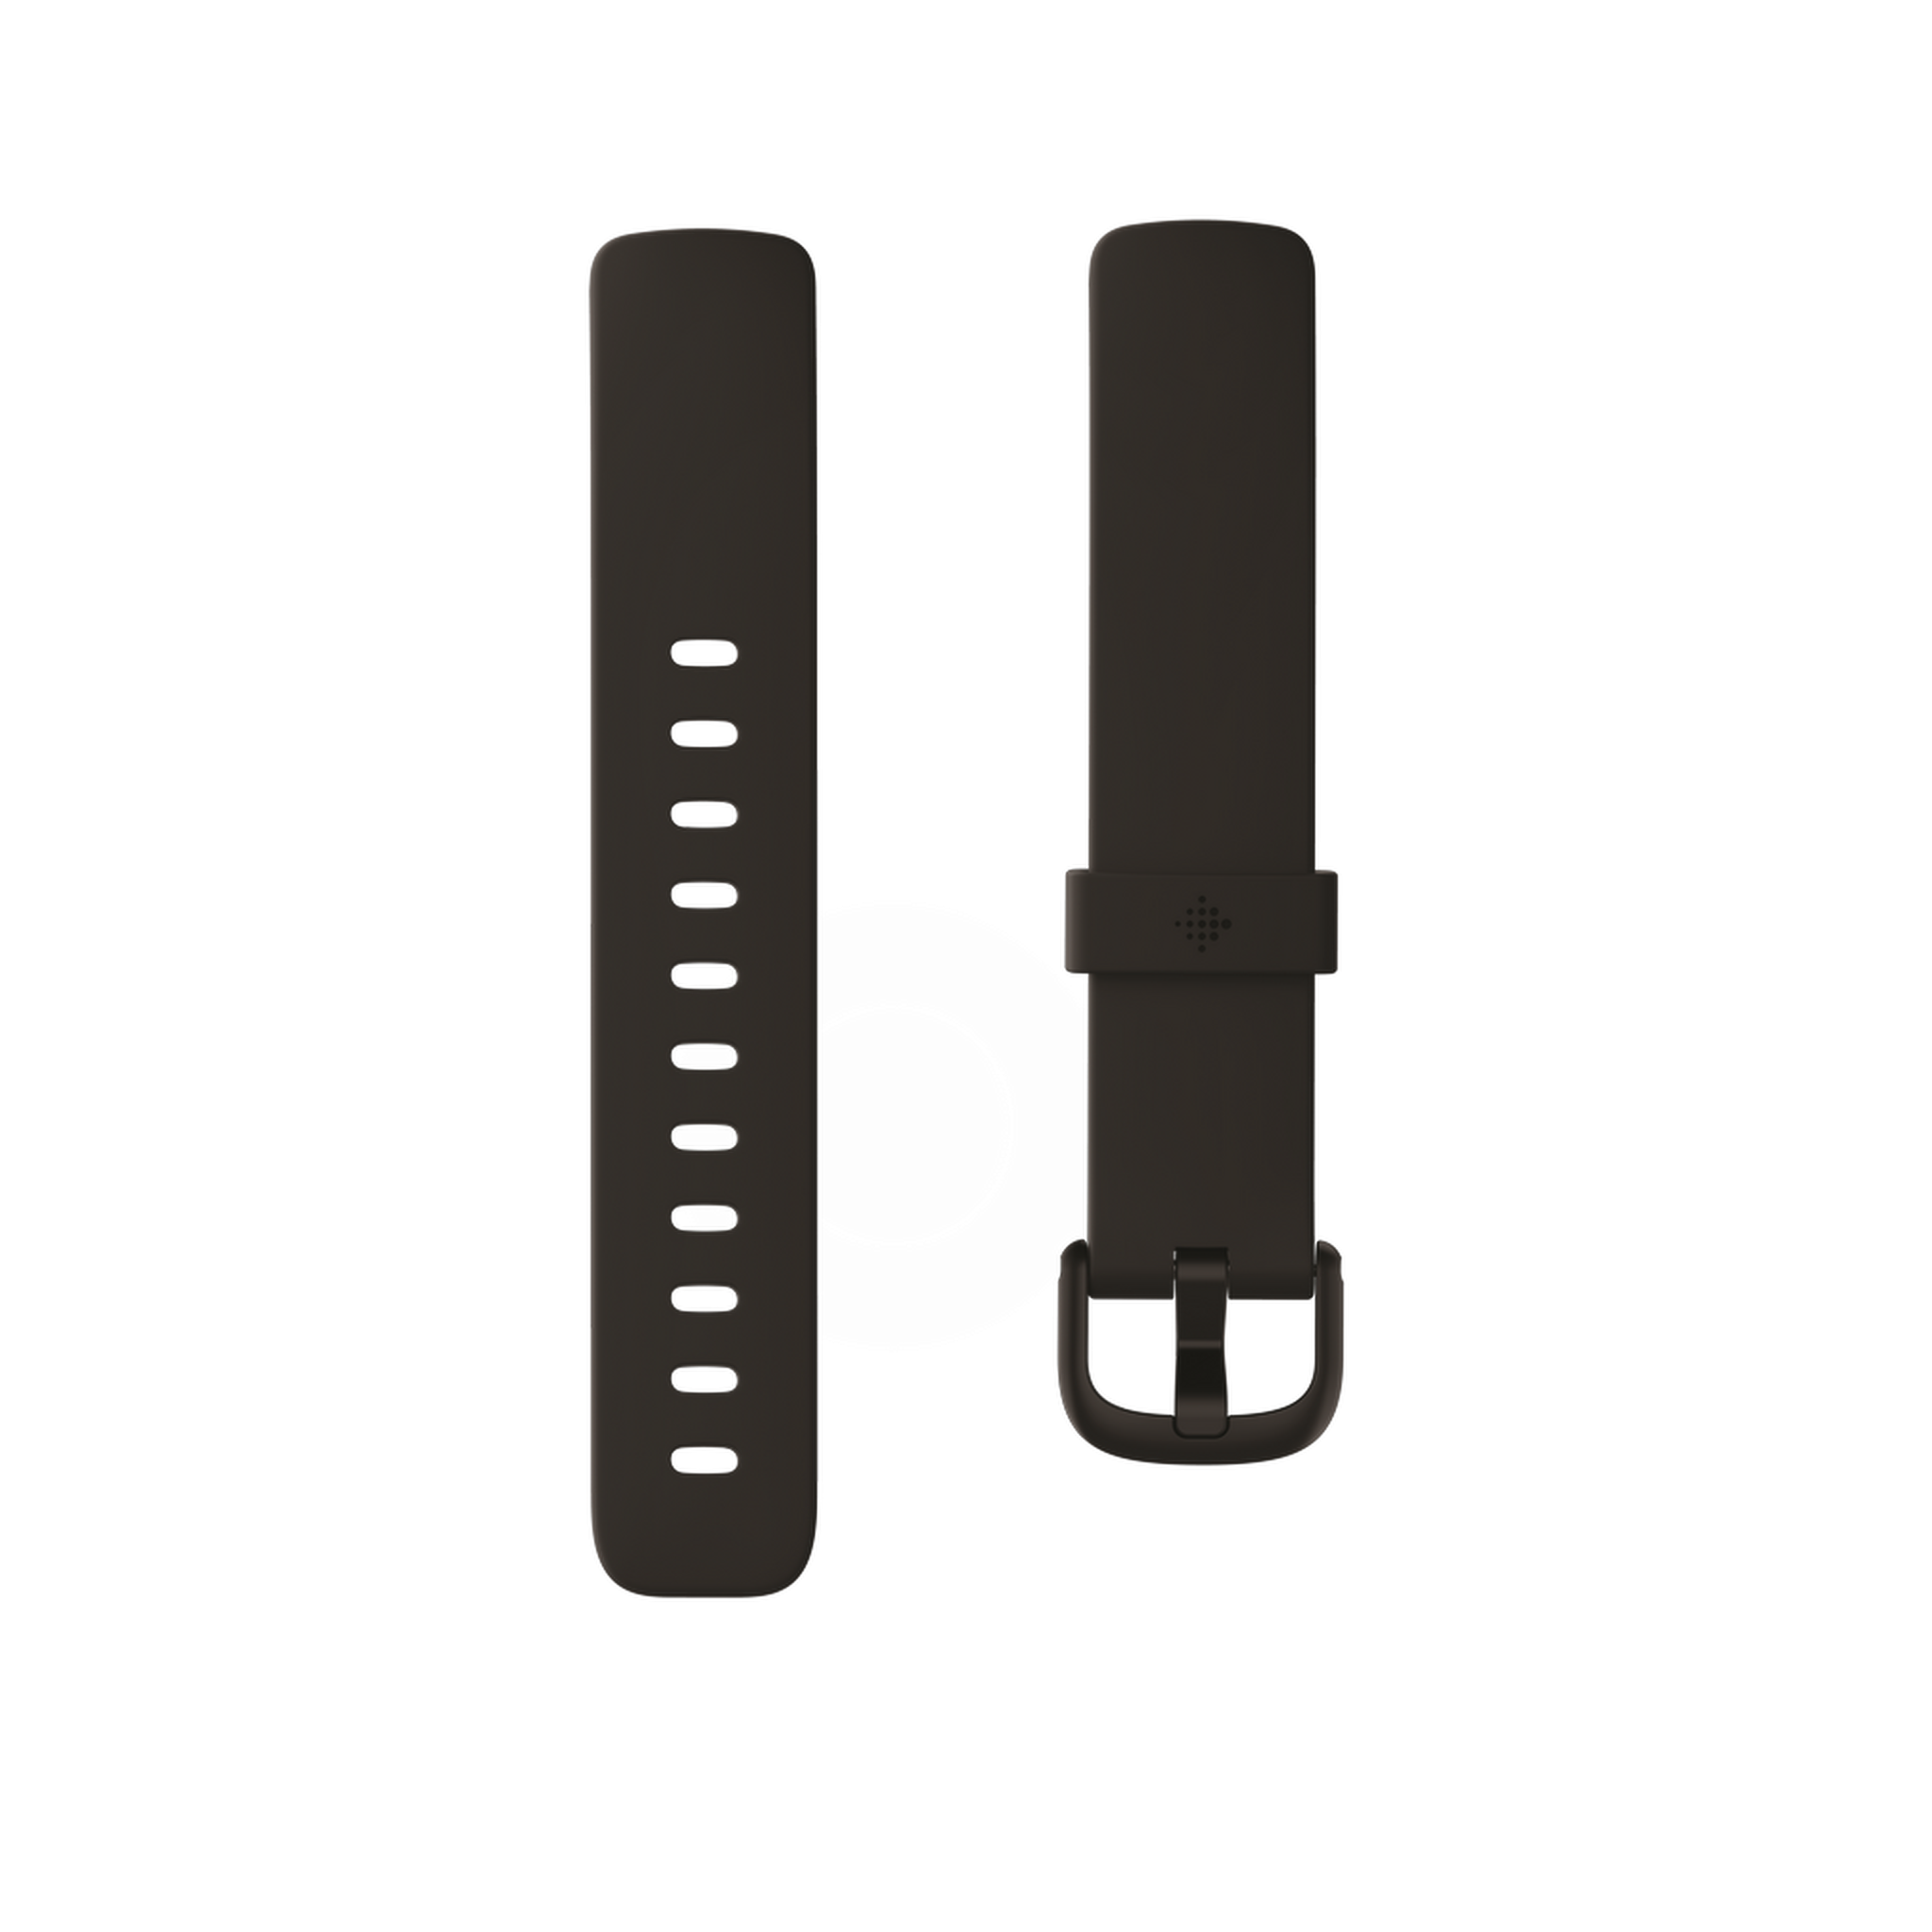 Fitbit Inspire 2 Activity Tracker - Black